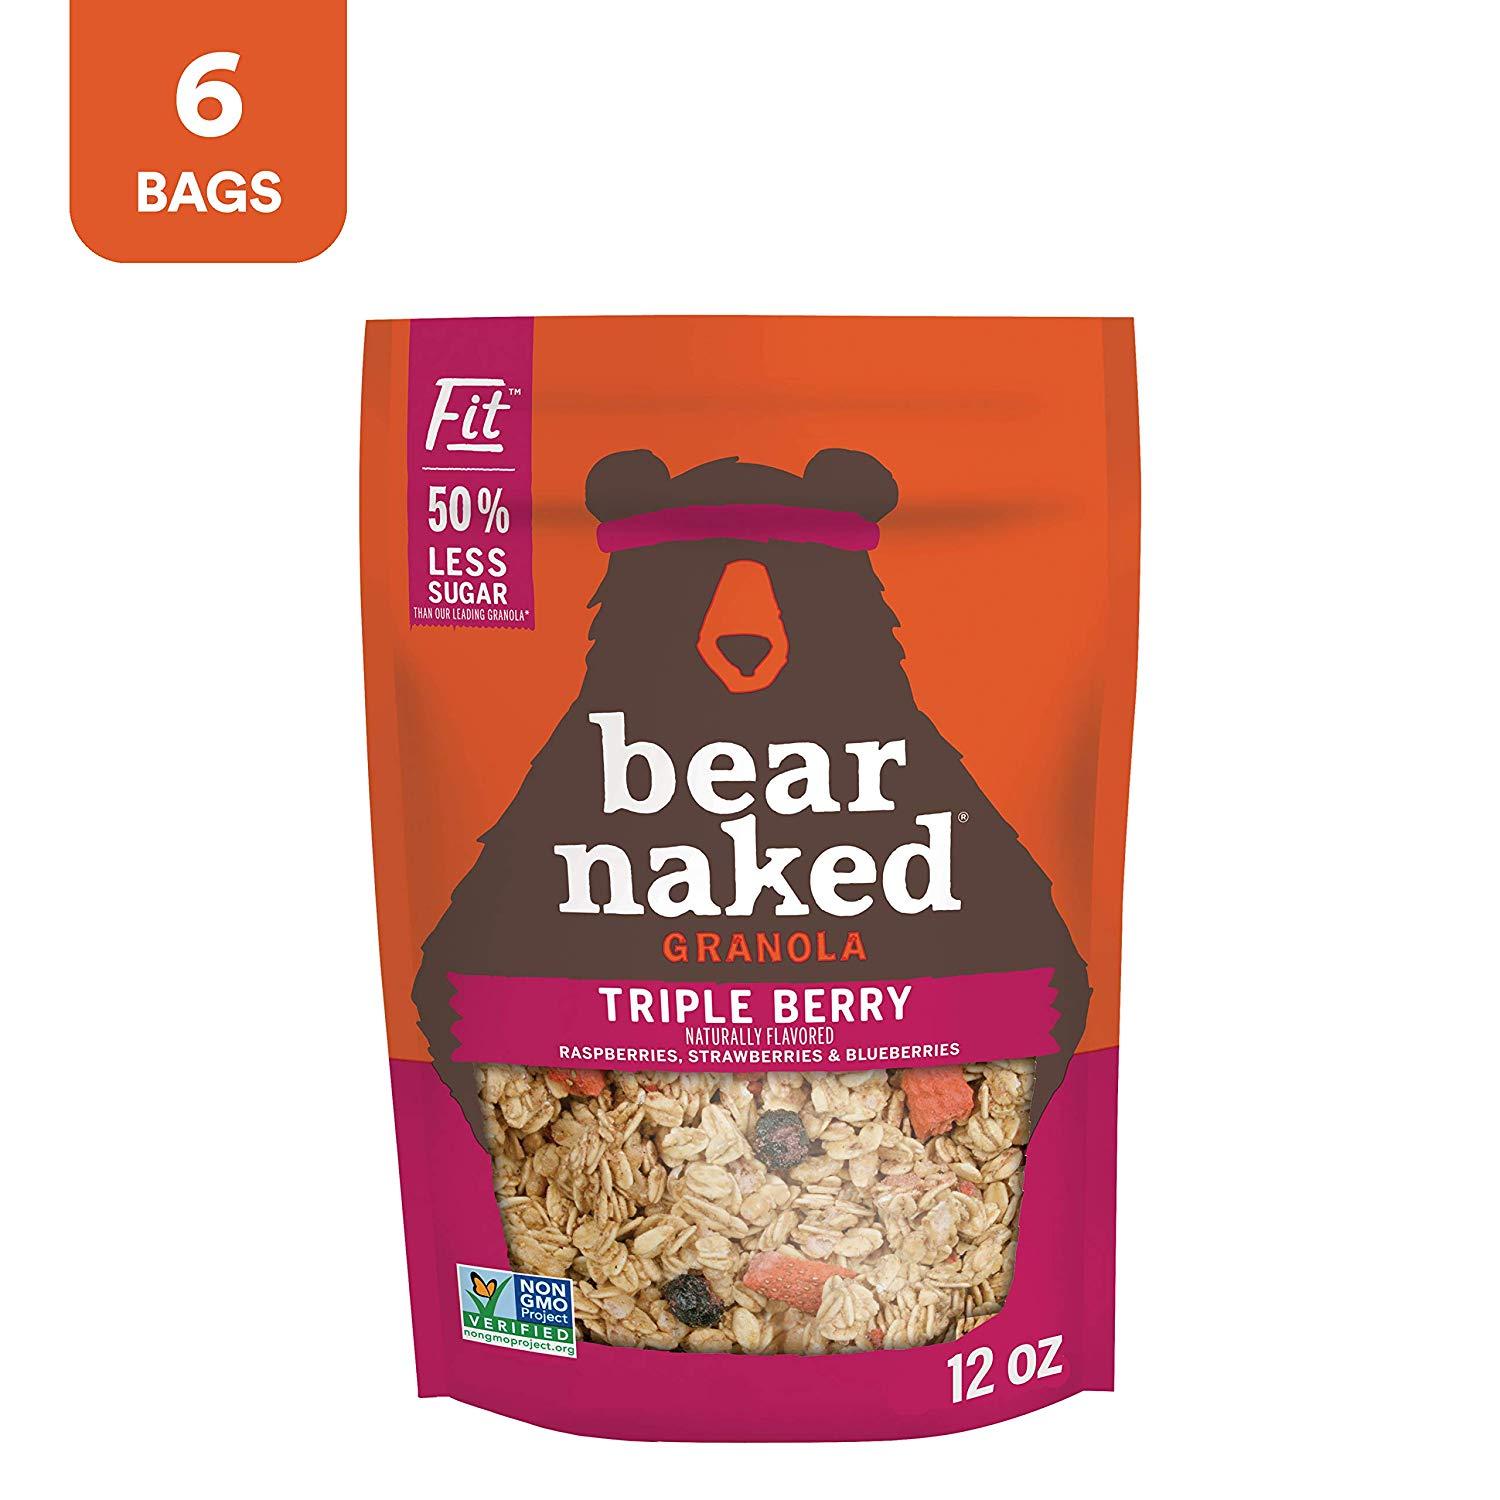 6 Pack of Bear Naked Granola for $8.55 Shipped